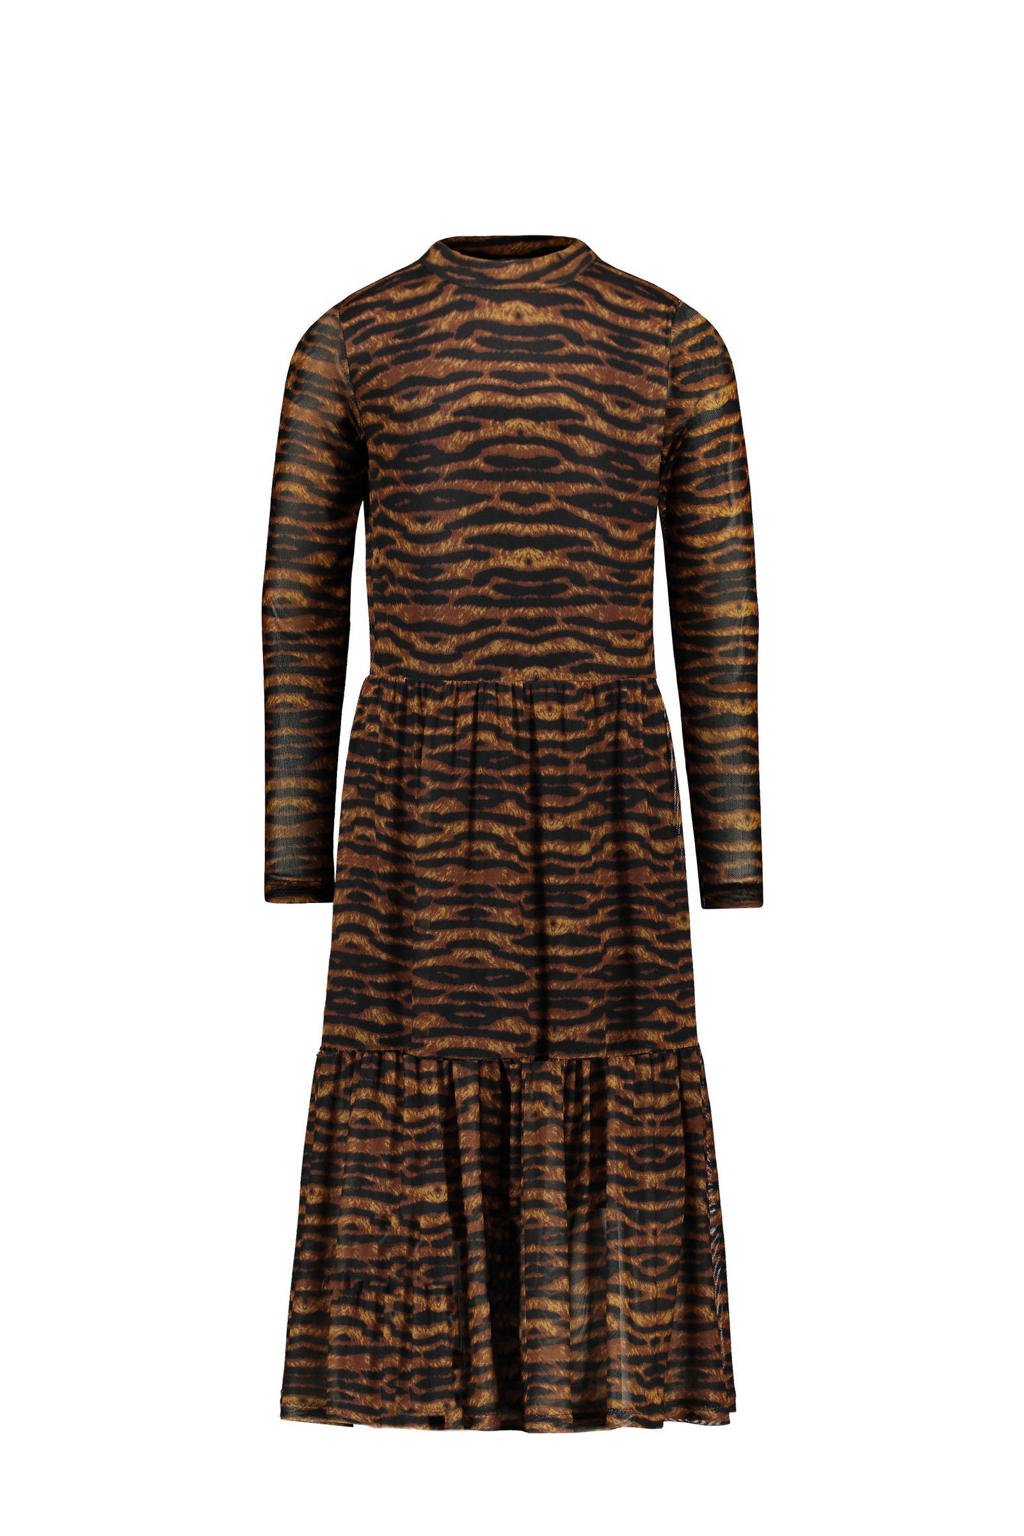 Bruine meisjes Like Flo maxi jurk met volant van polyester met dierenprint, lange mouwen en opstaande kraag